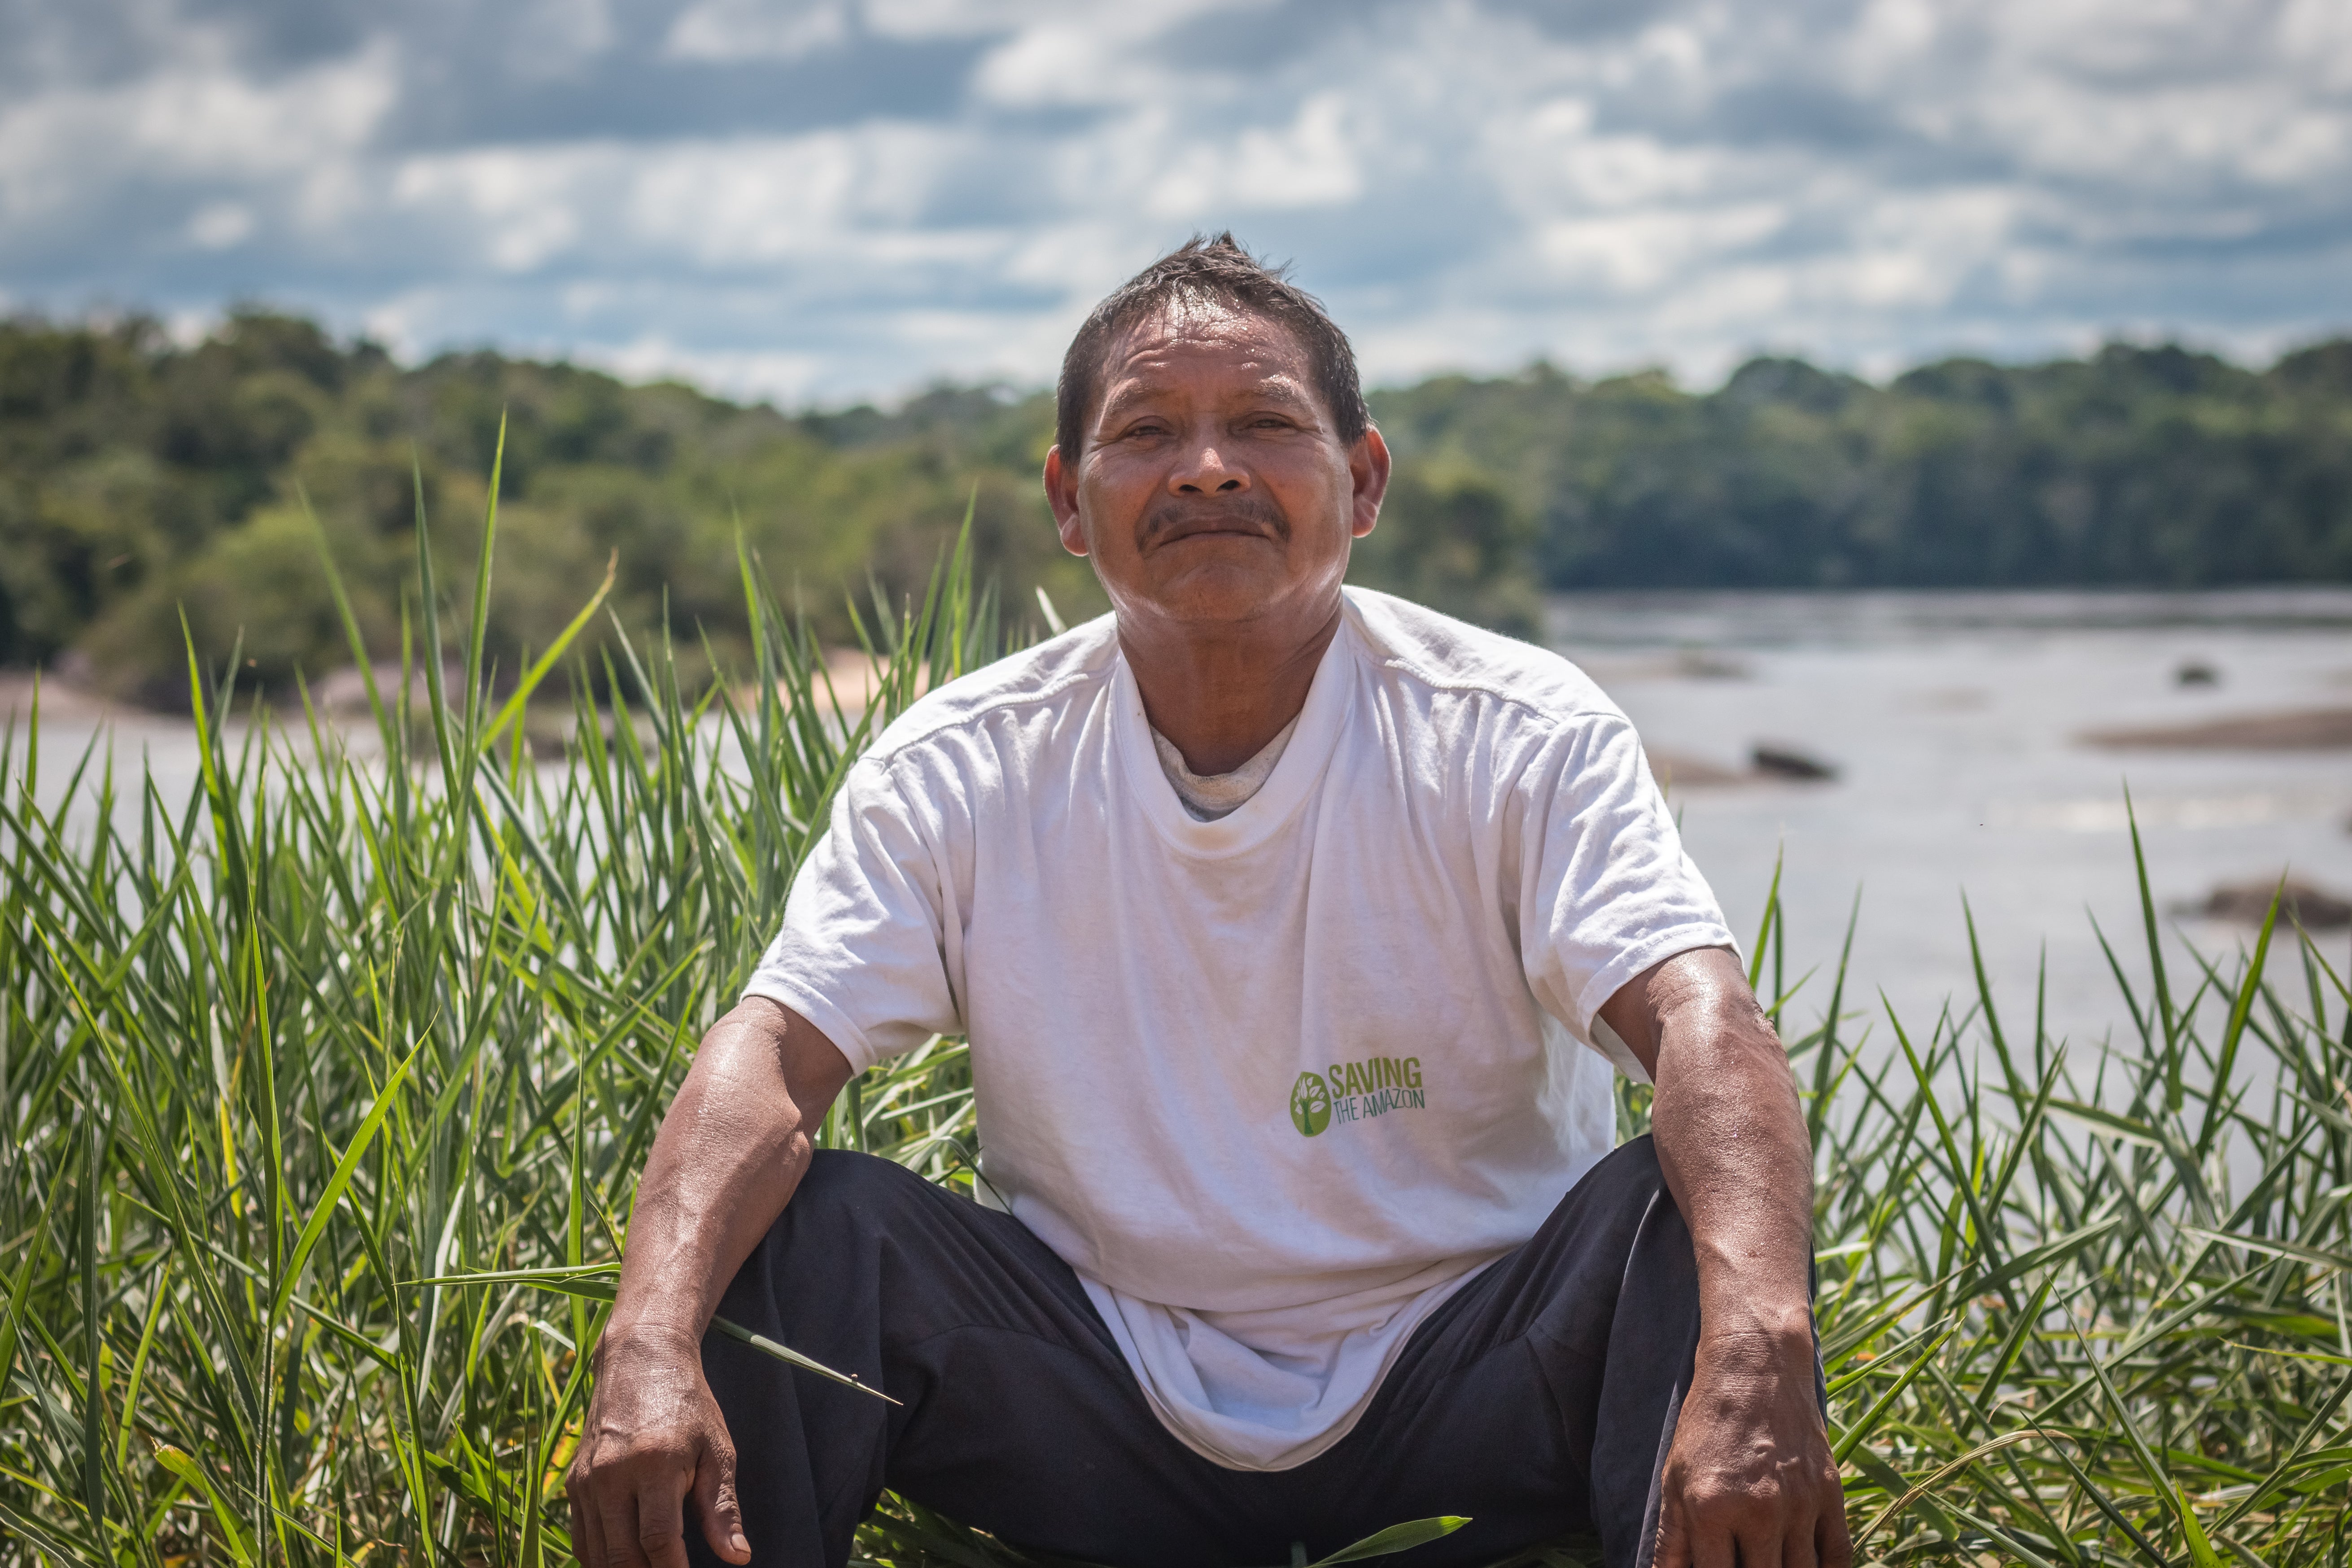 Saving the Amazon and indigenous communities